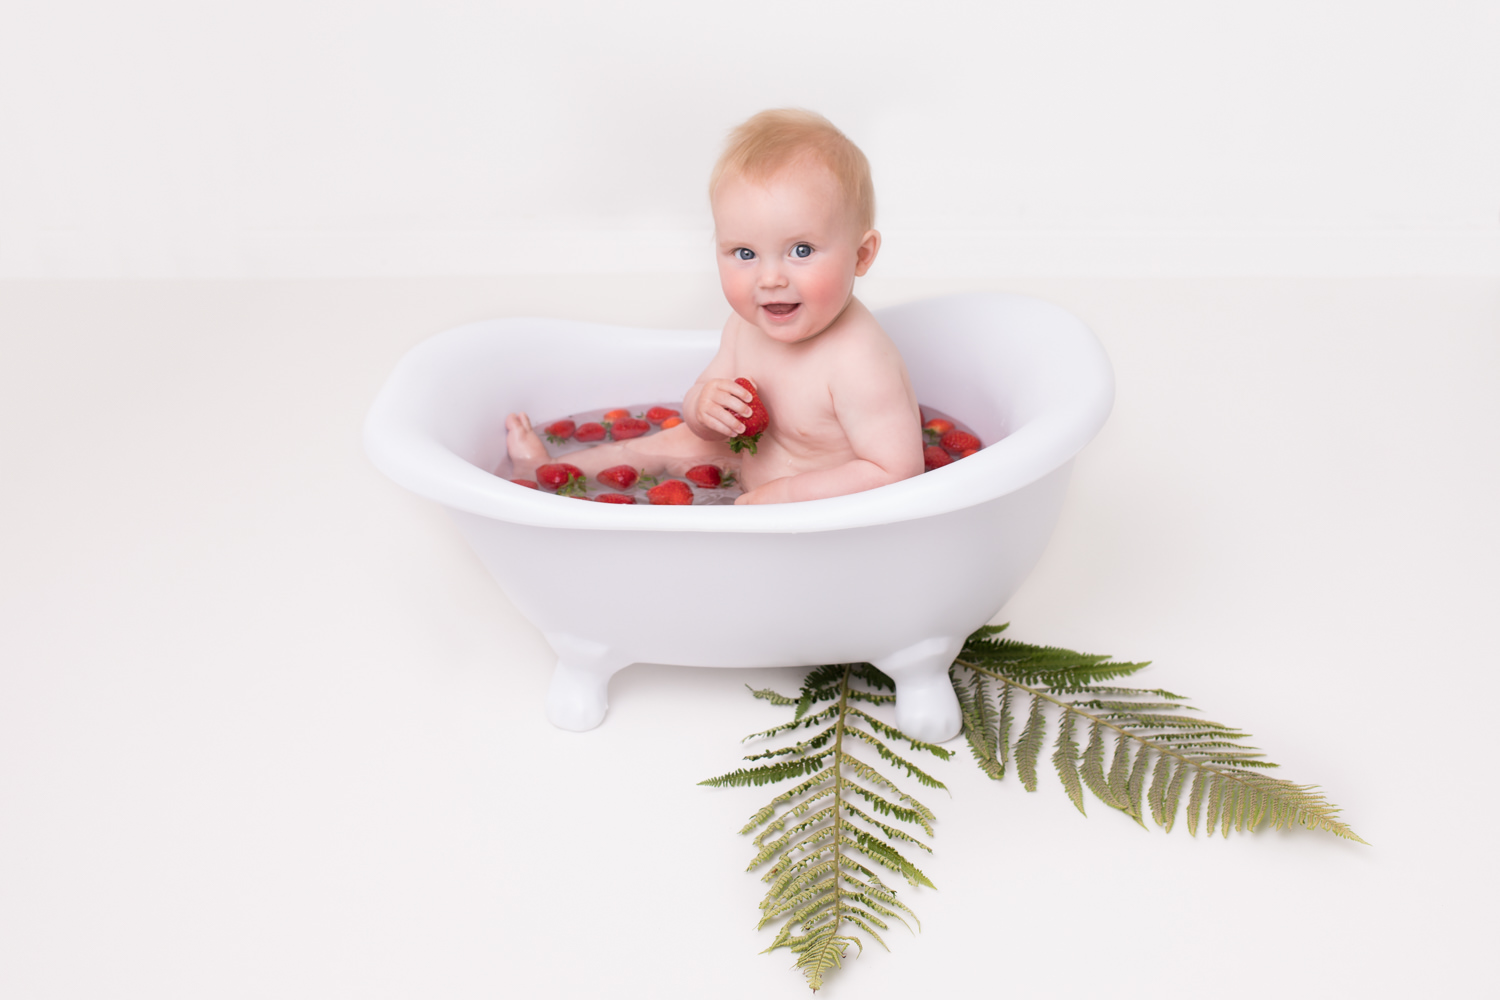 cake smash photography edinburgh, photography of baby boy in bath with strawberries by professional baby photographer Beautiful Bairns Photography Edinburgh